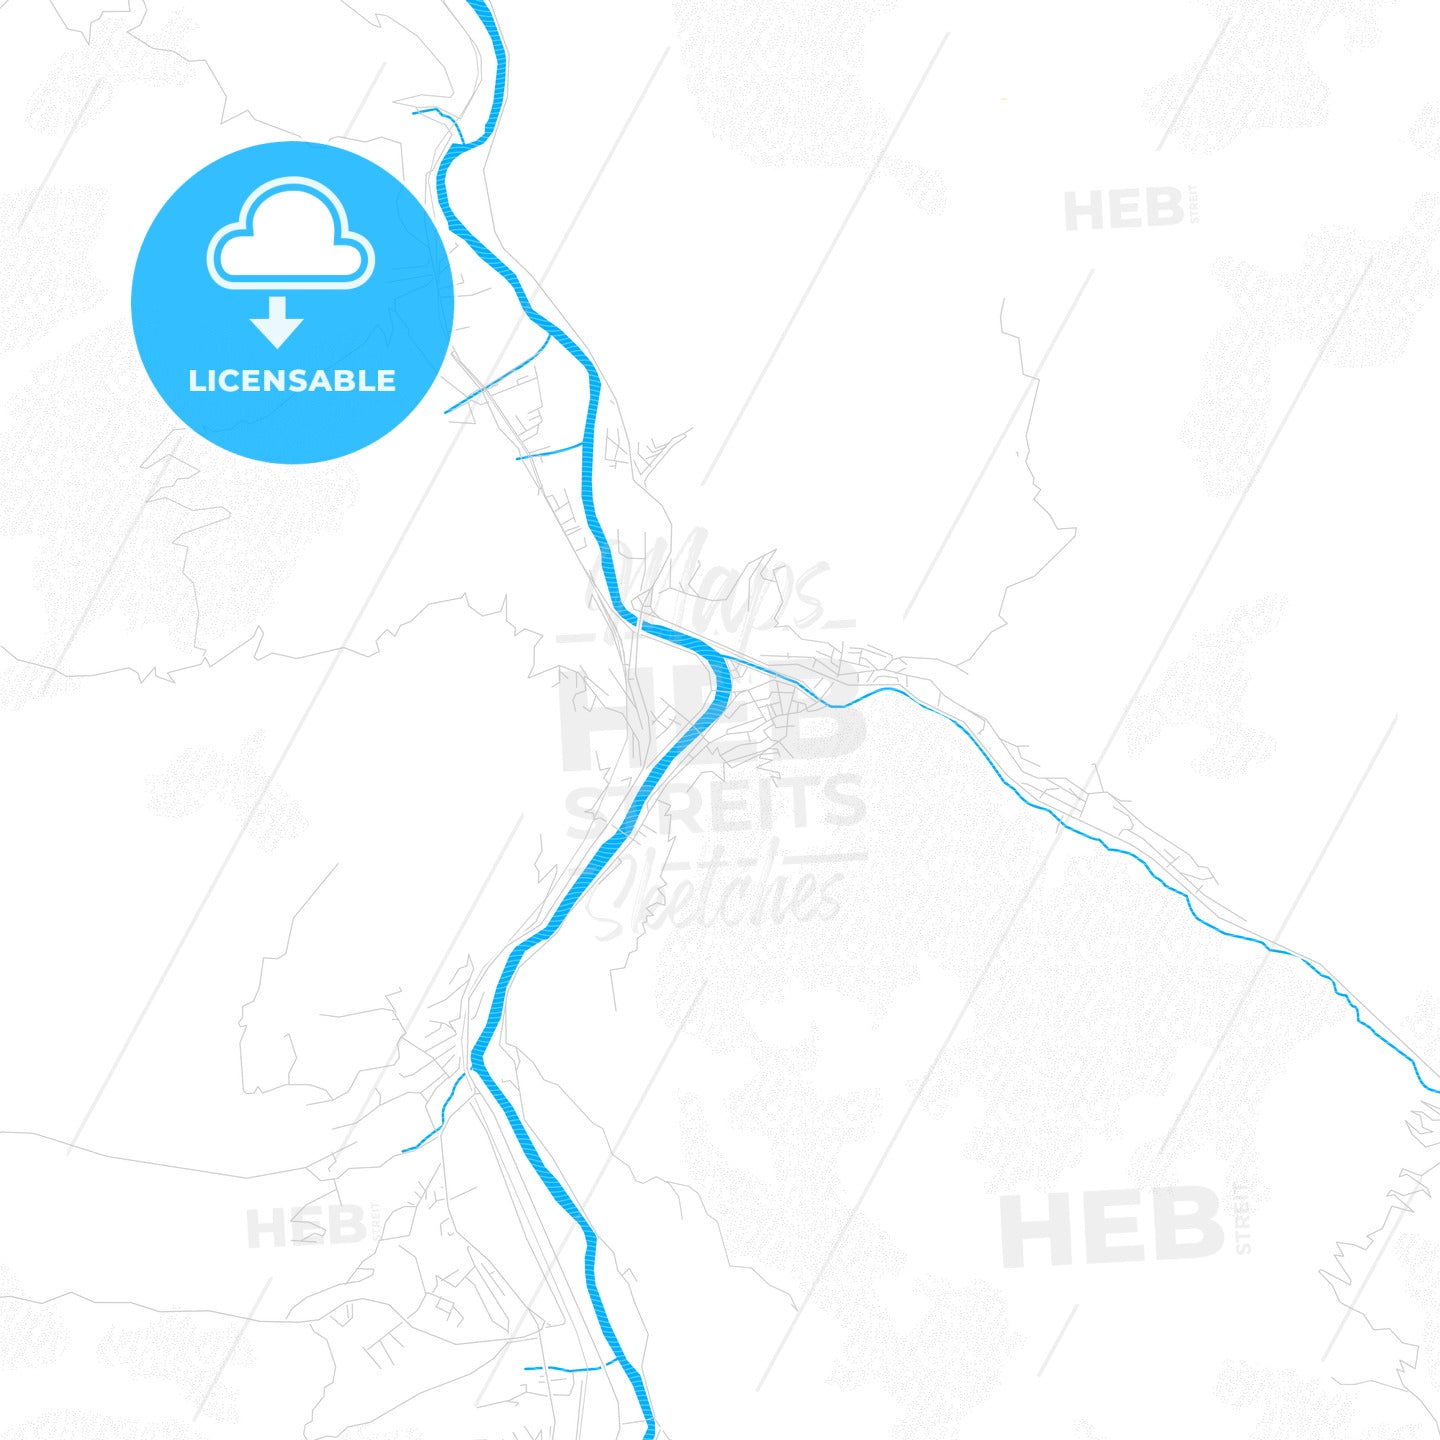 Prijepolje, Serbia PDF vector map with water in focus